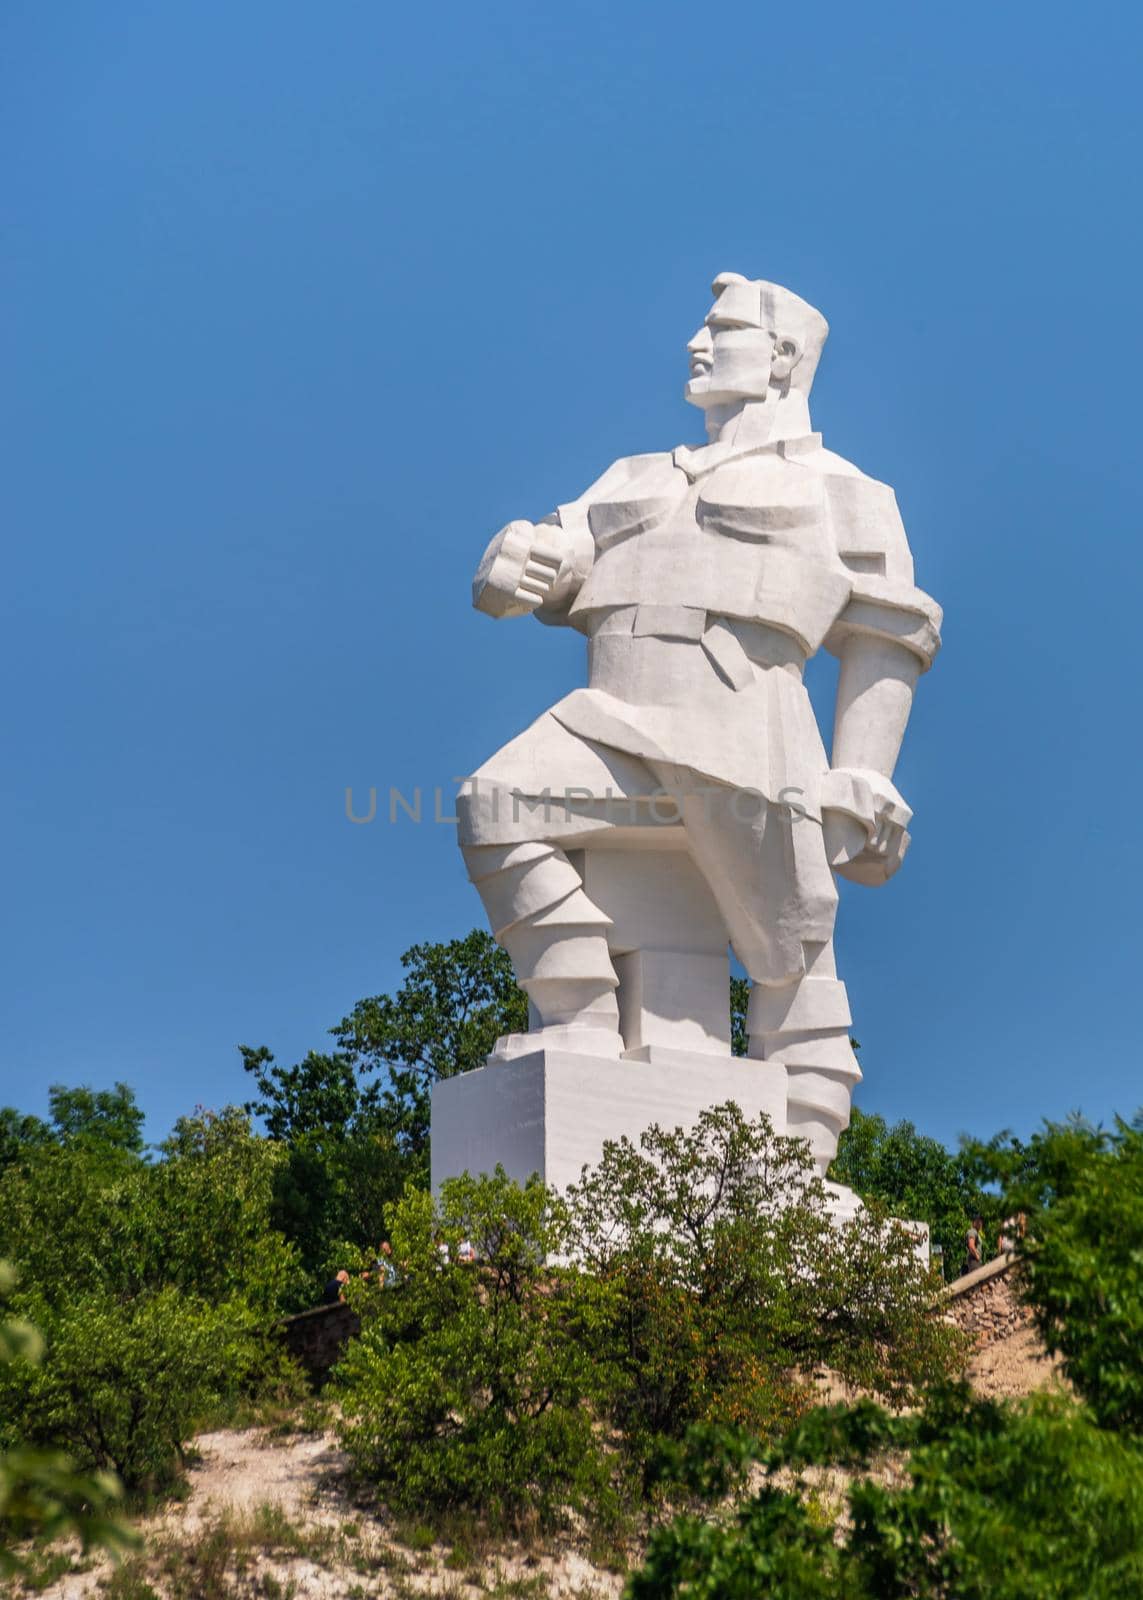 Svyatogorsk, Ukraine 07.16.2020.  Monument to Artem on the mountain above the Svyatogorsk or Sviatohirsk lavra on a sunny summer day